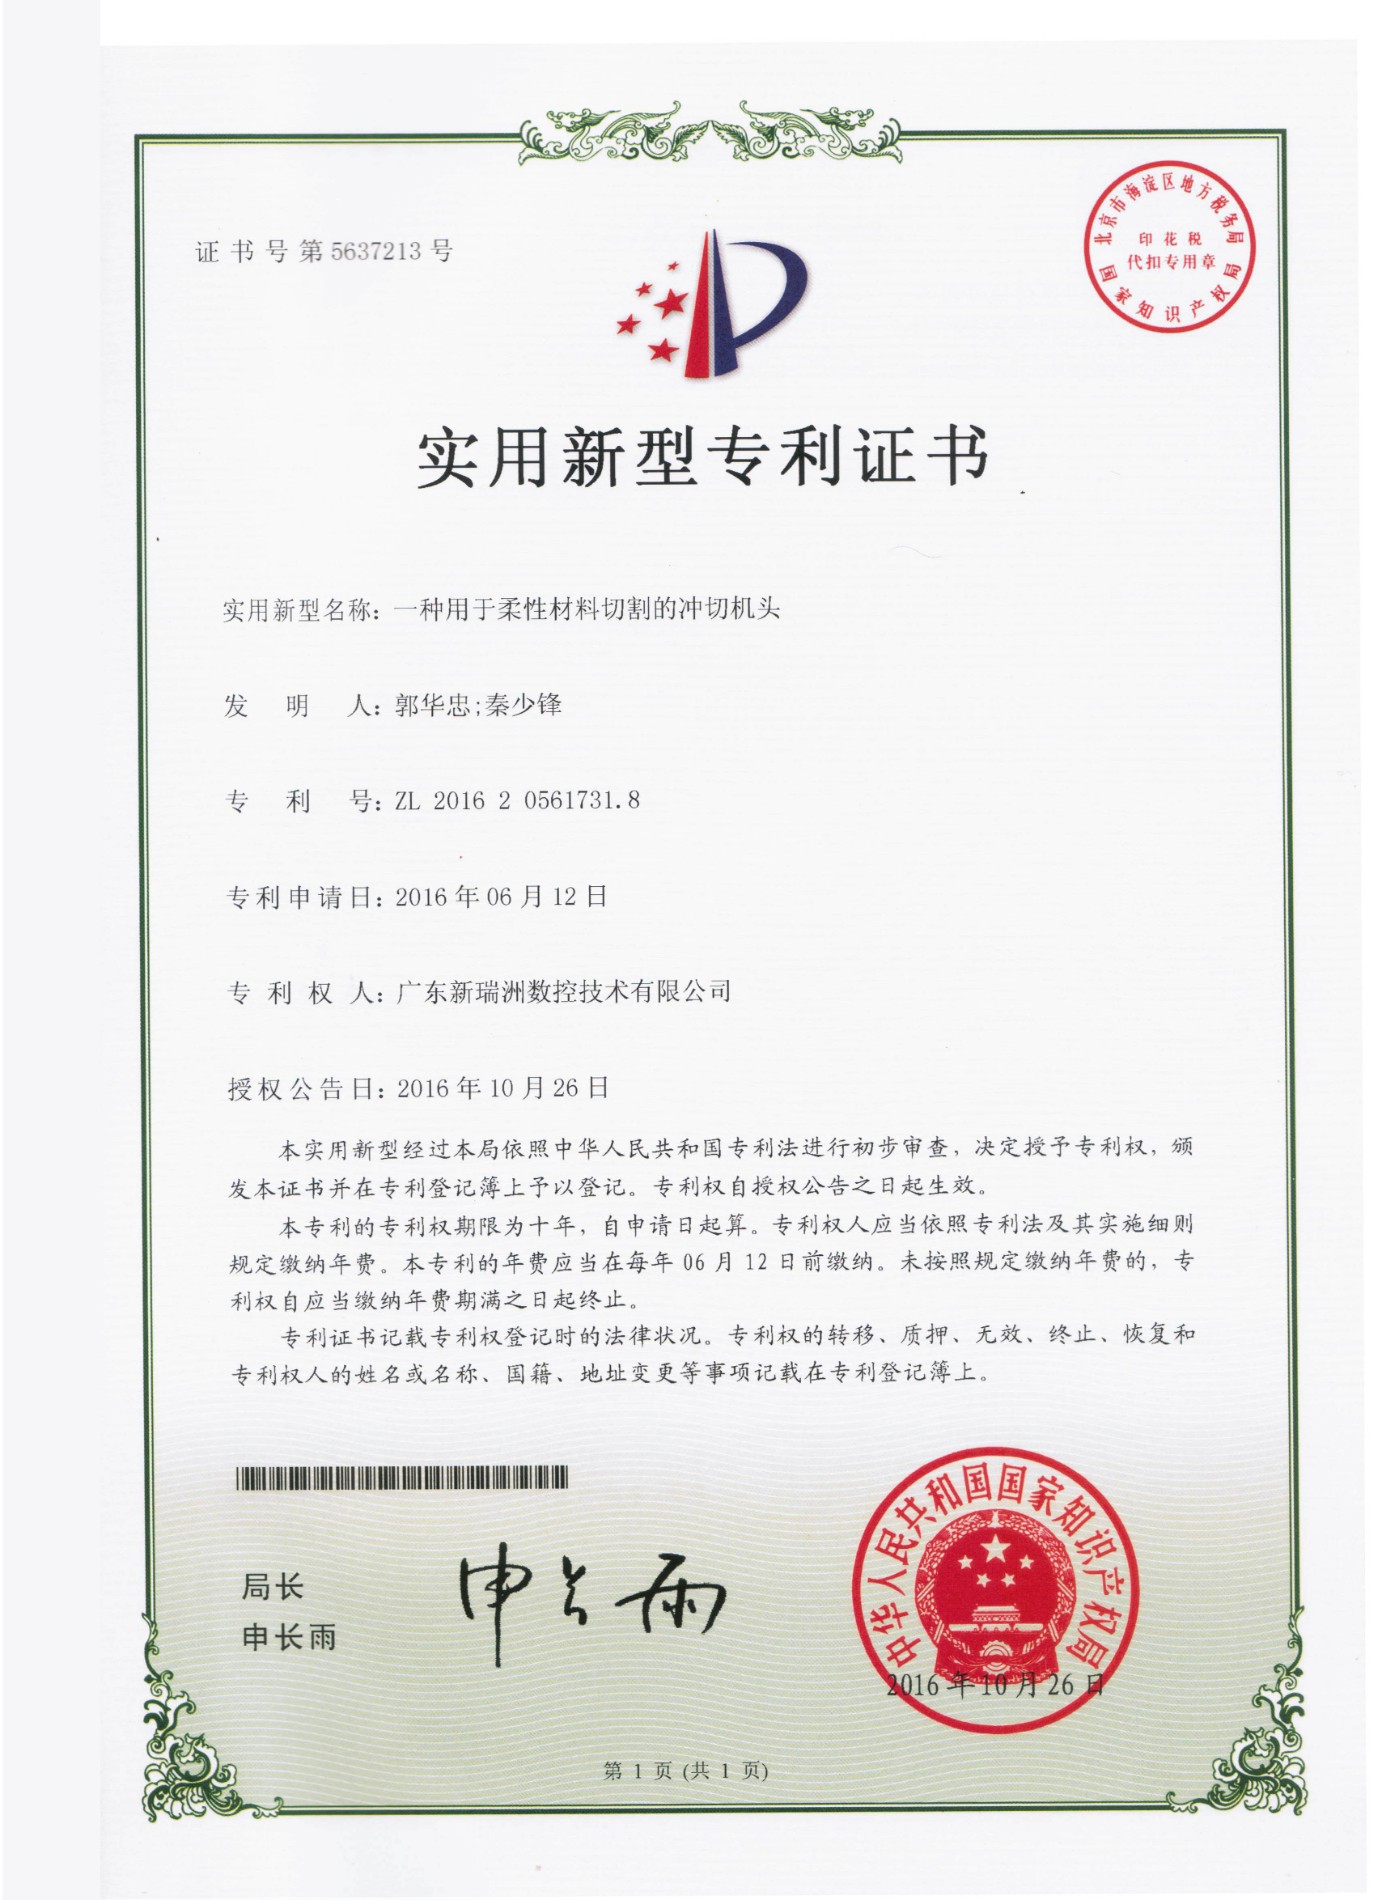 Certificado de Patente de Modelo de Utilidade